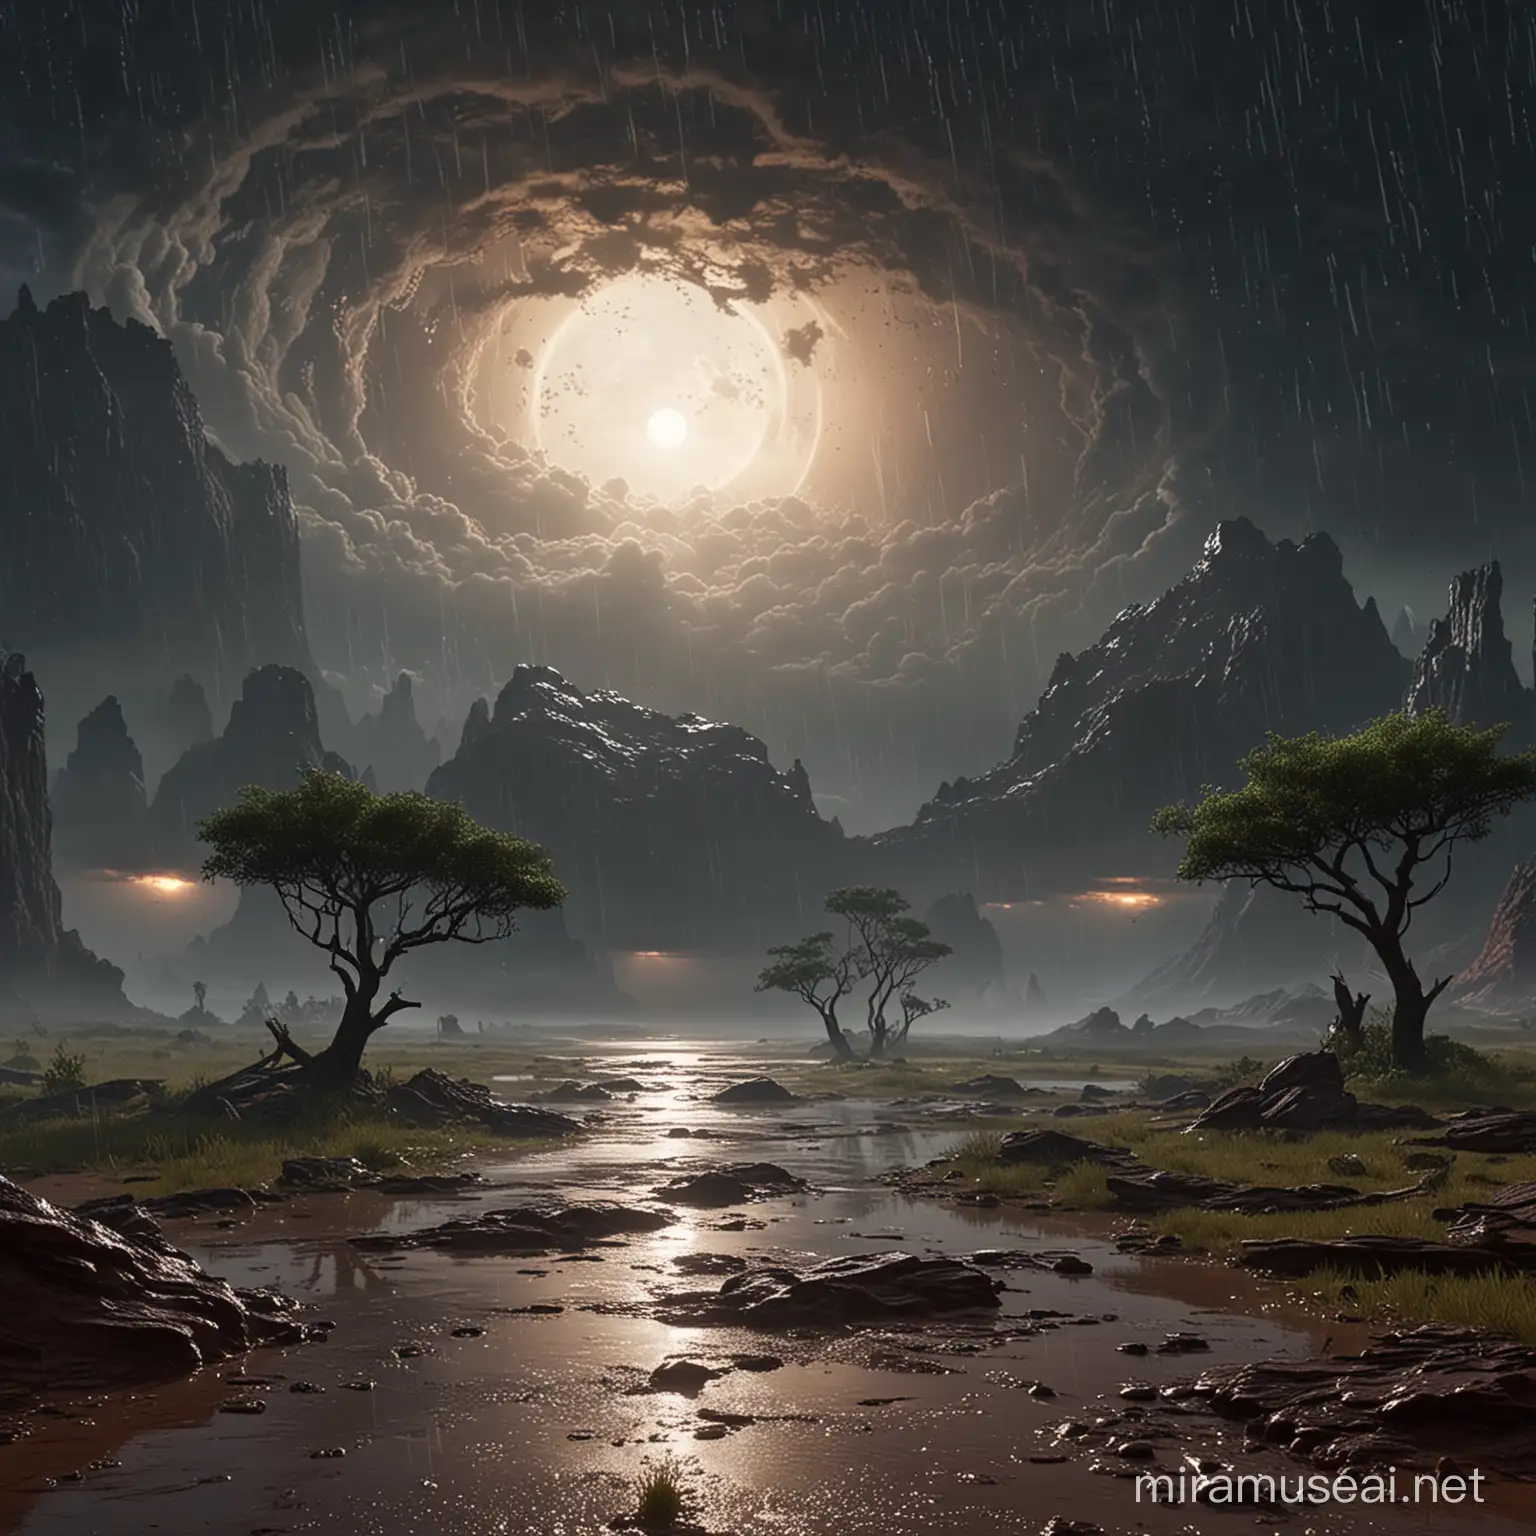 Mystical Rain Storm on an Alien Planet